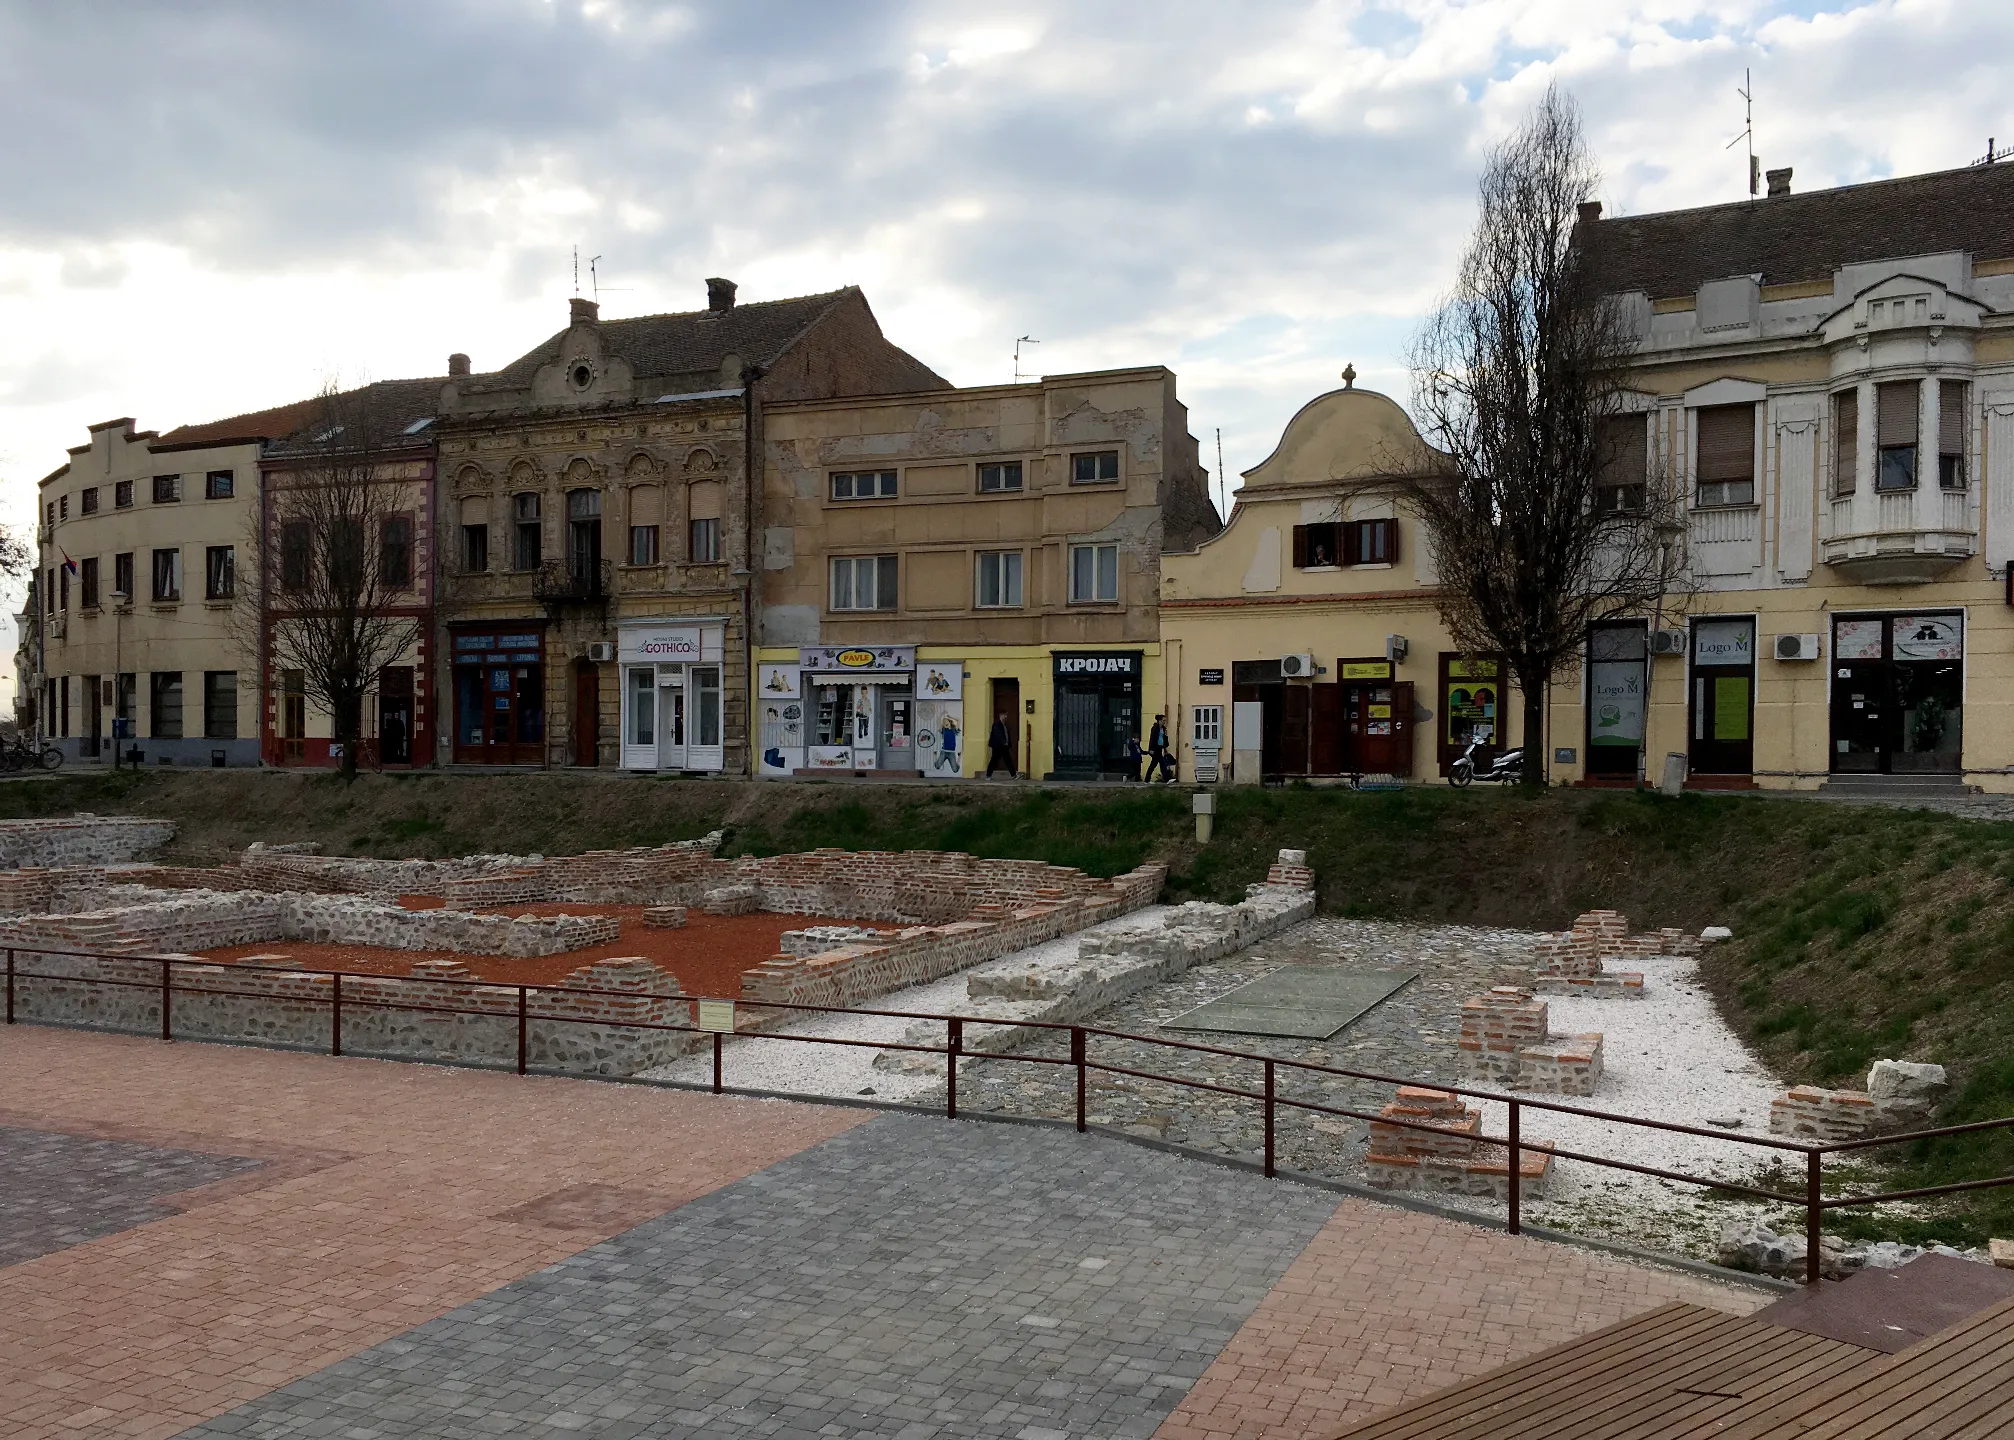 Photo showing: A quarter in Sremska Mitrovica built around Roman ruins